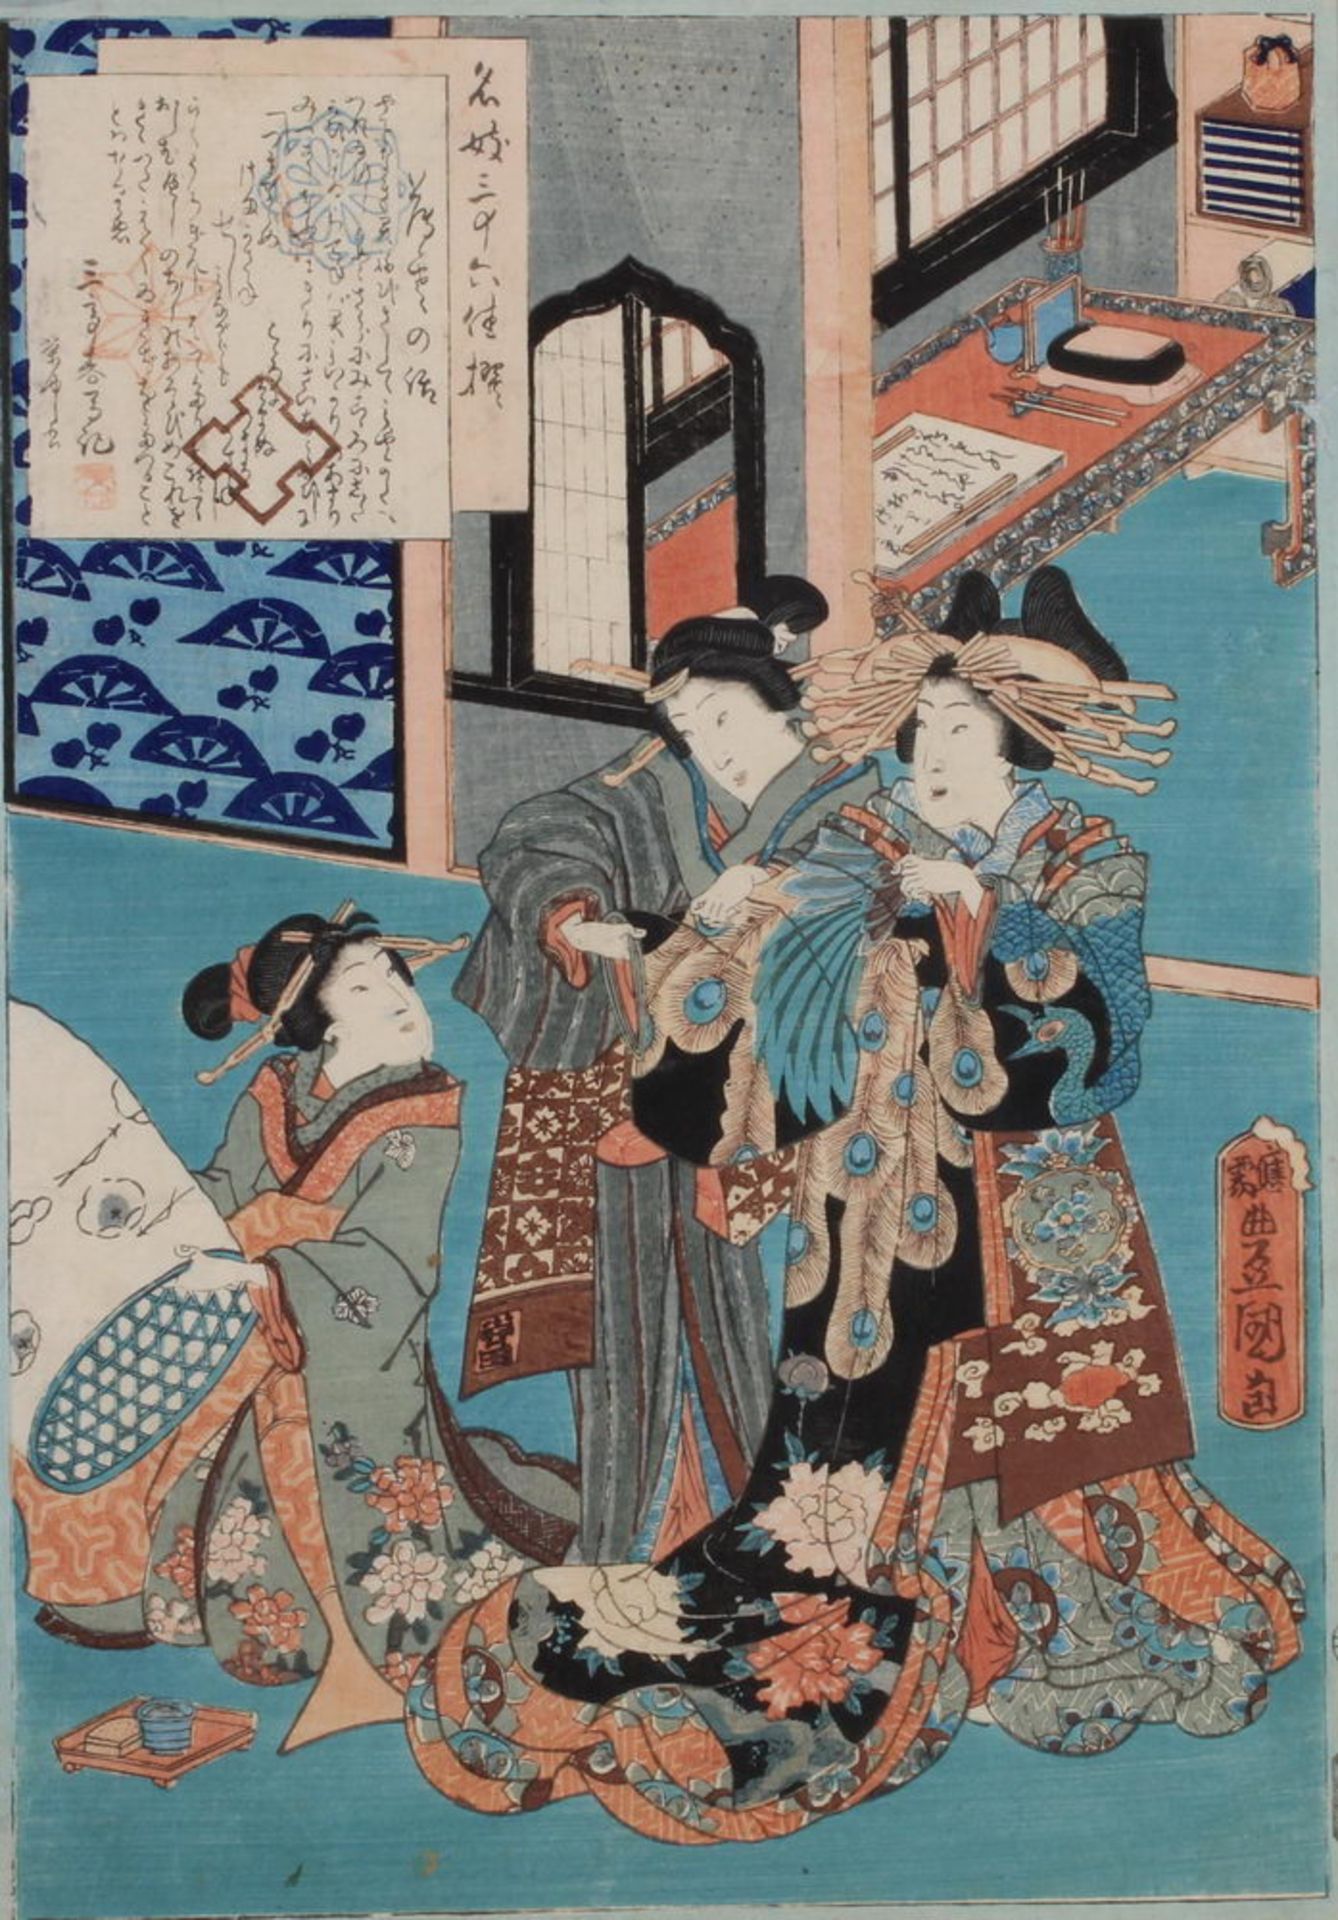 Farbholzschnitt, "Usugomo", Japan, 19. Jh., Toyokuni III, Datumssiegel 1860, Verleger Tsutaya Kichi